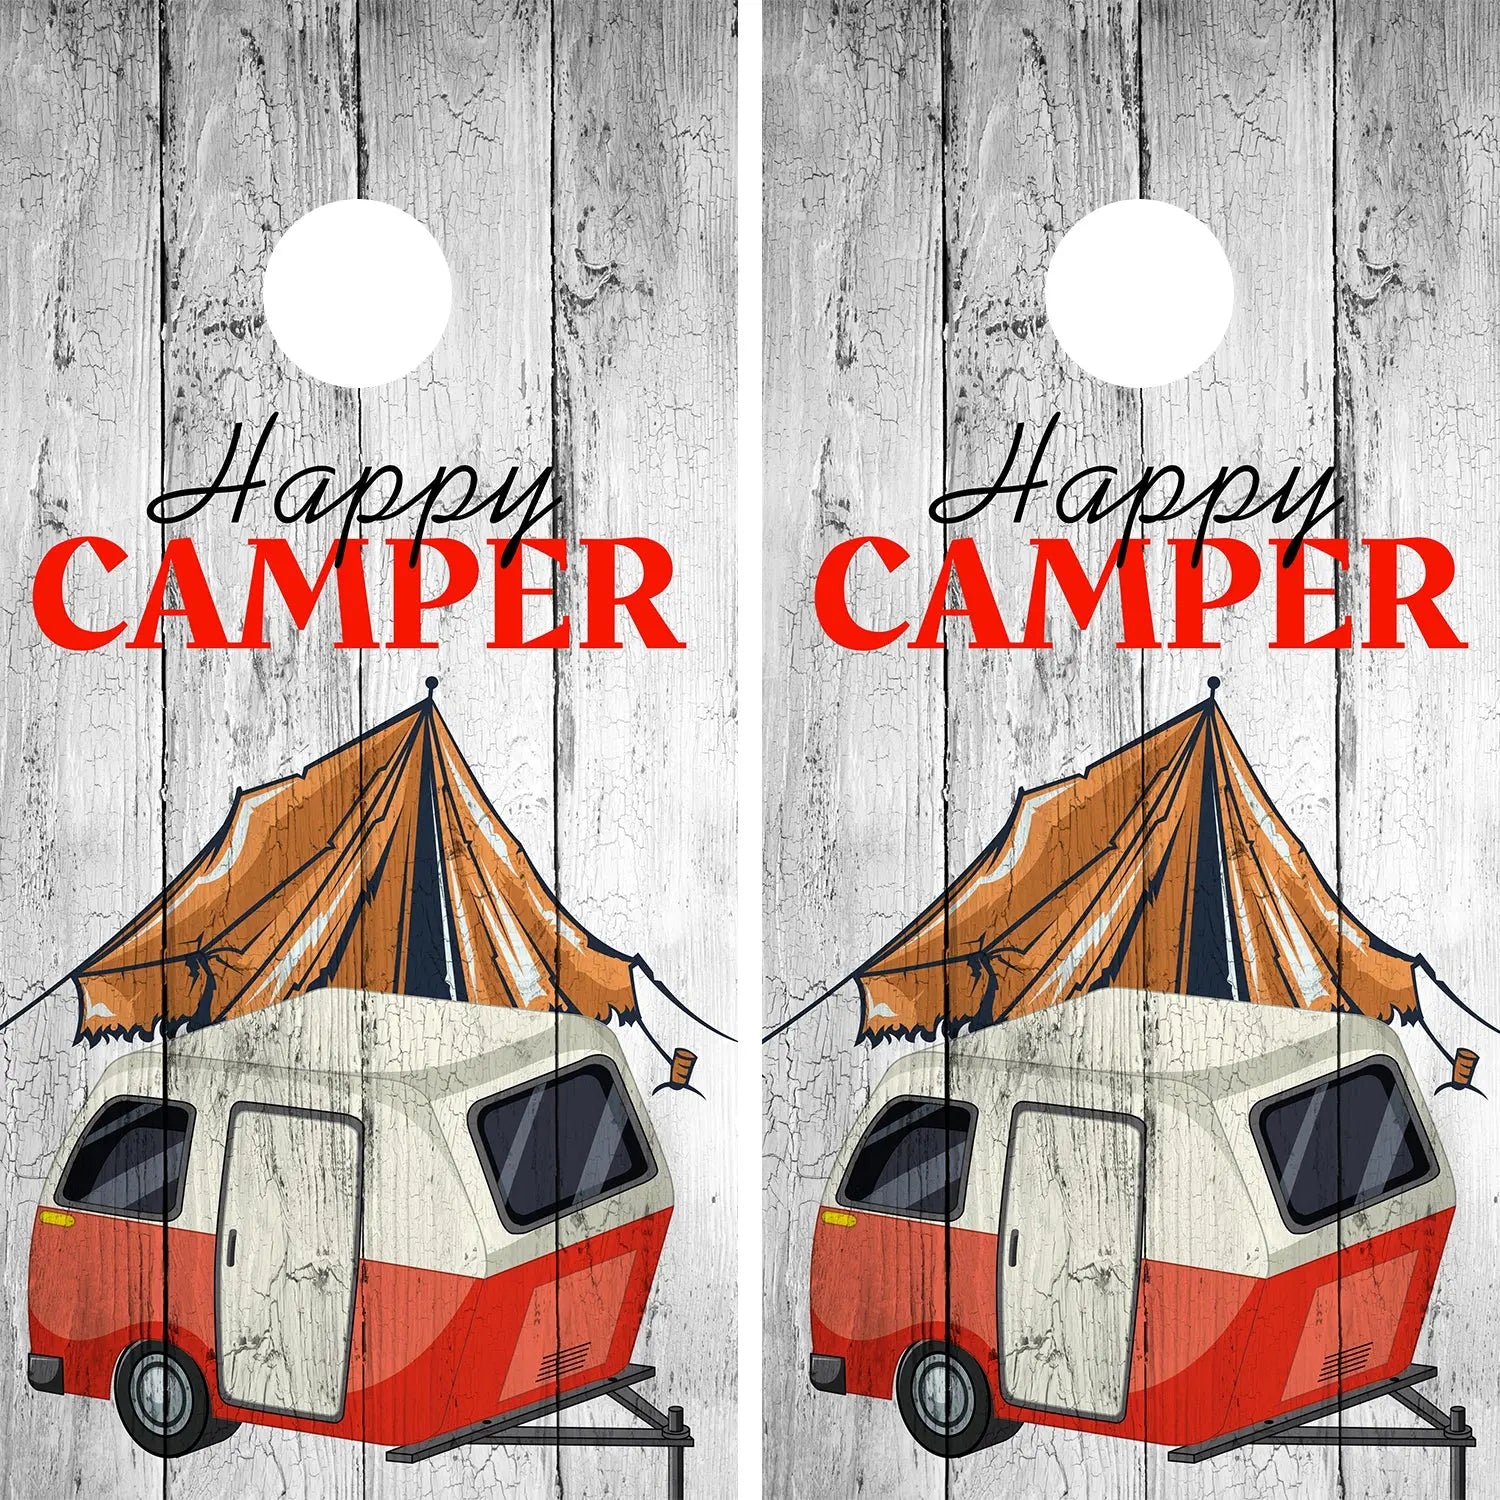 Happy Camper Cornhole Vinyl Wraps & Cornhole Boards (2 Pack) FH2227B KT Cornhole